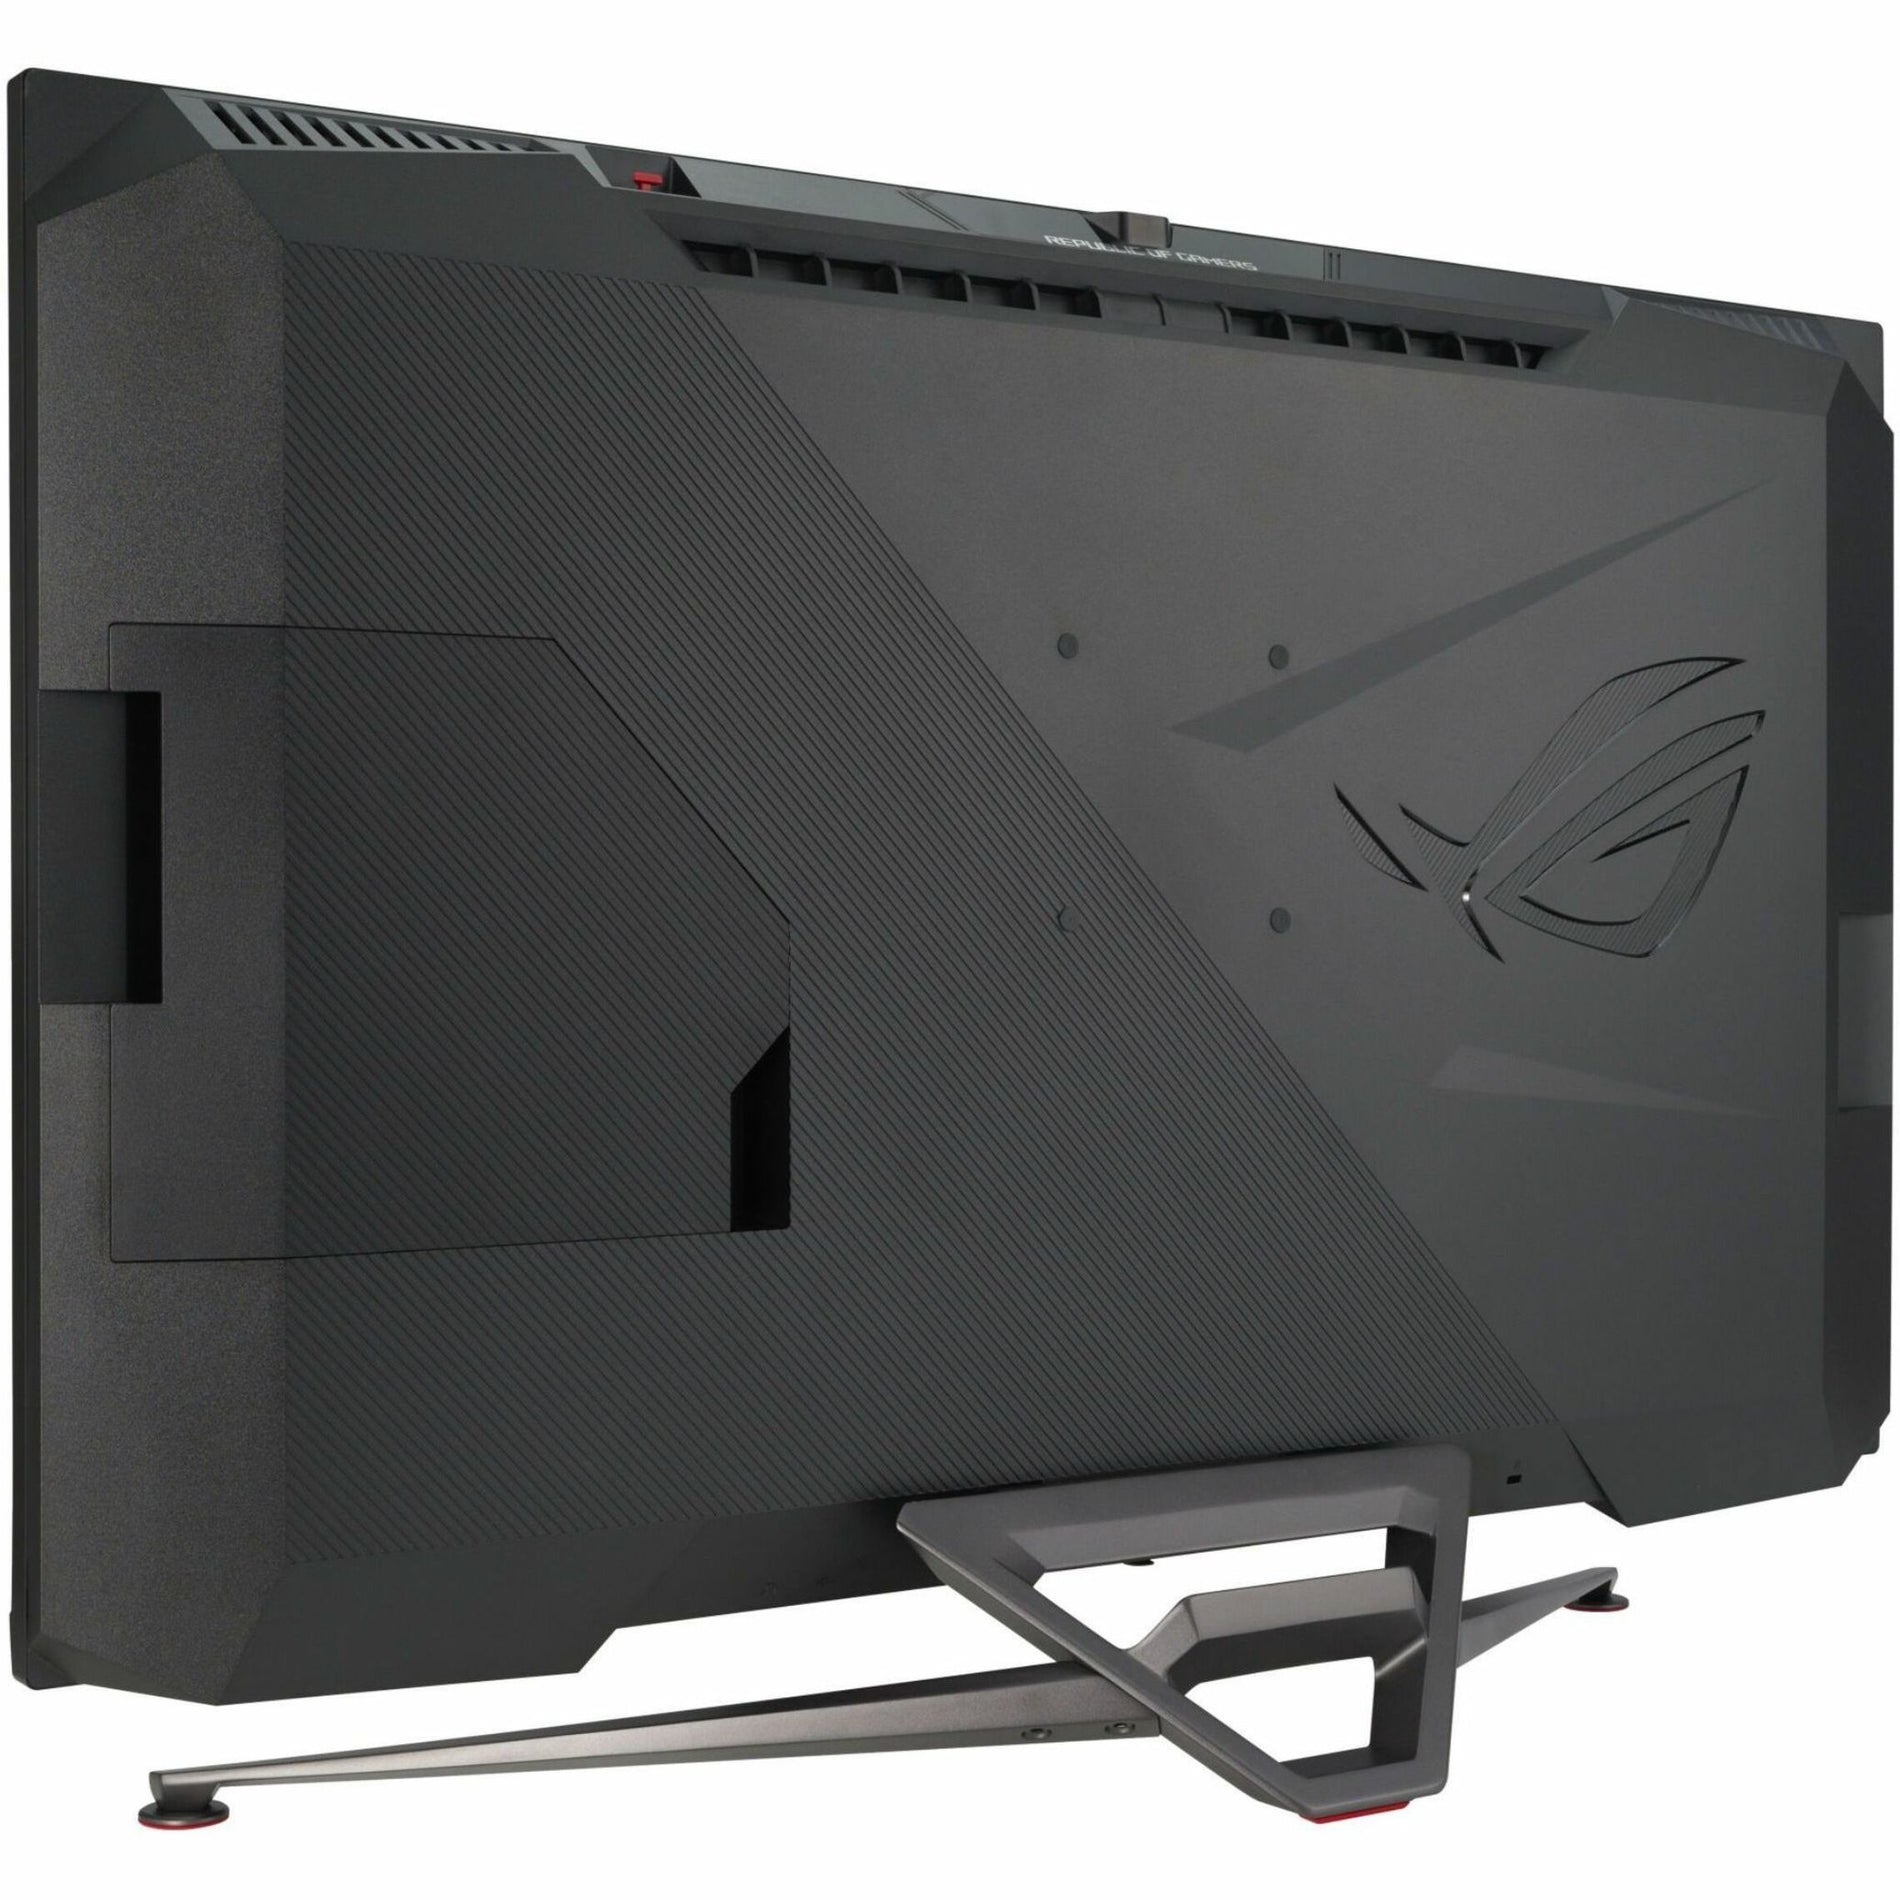 Asus ROG PG38UQ Widescreen Gaming LED Monitor, 38" 4K UHD, 144Hz, G-Sync Compatible, USB Hub